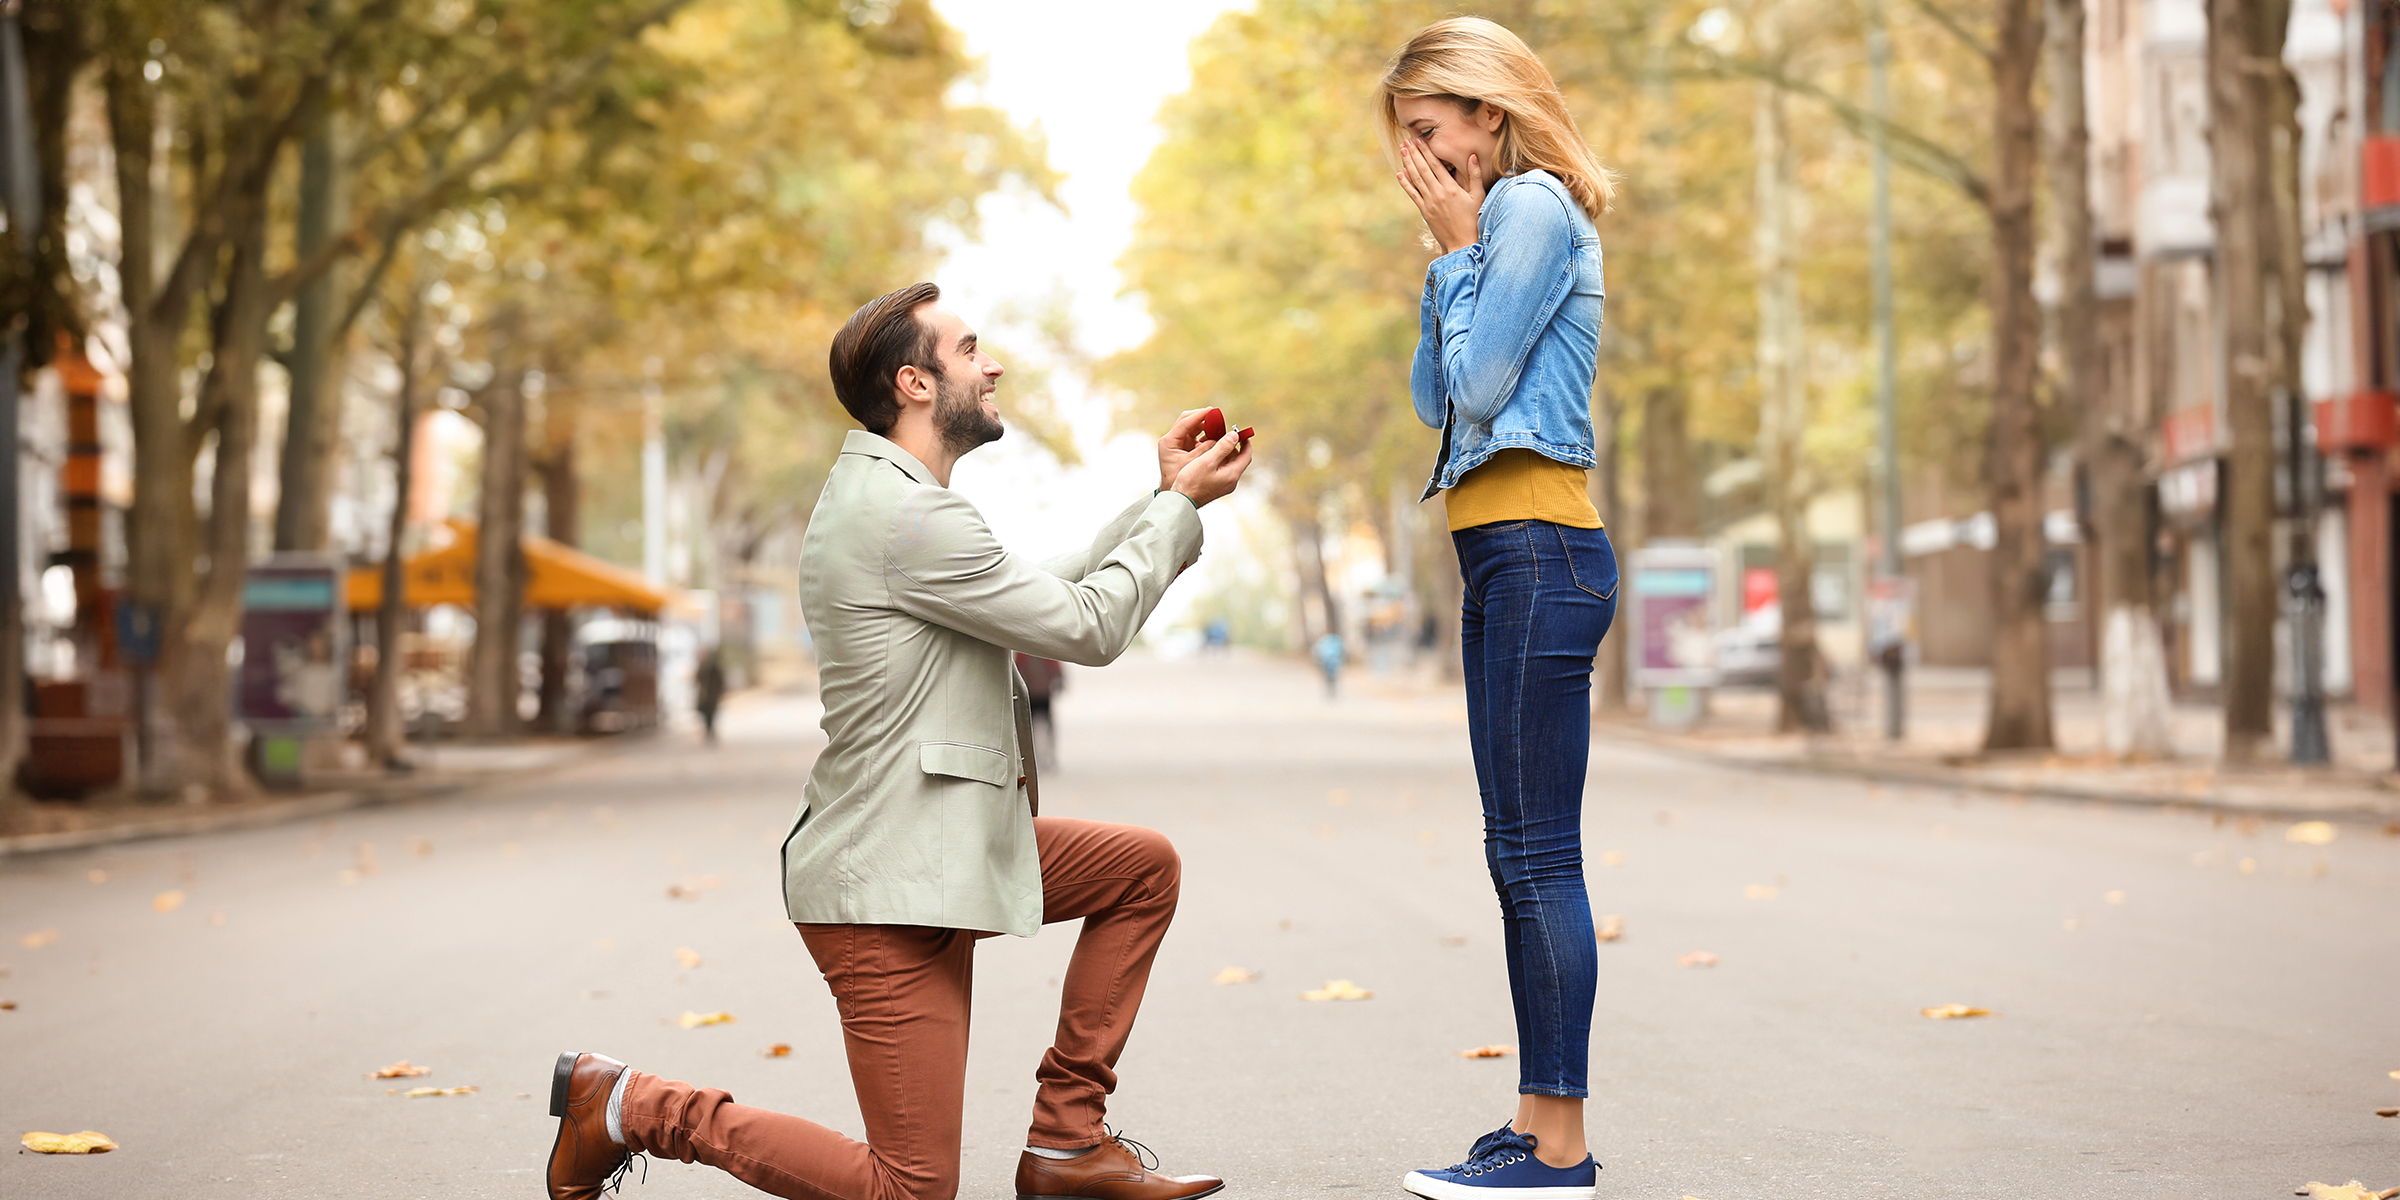 Un homme demande une femme en mariage | Source : Shutterstock